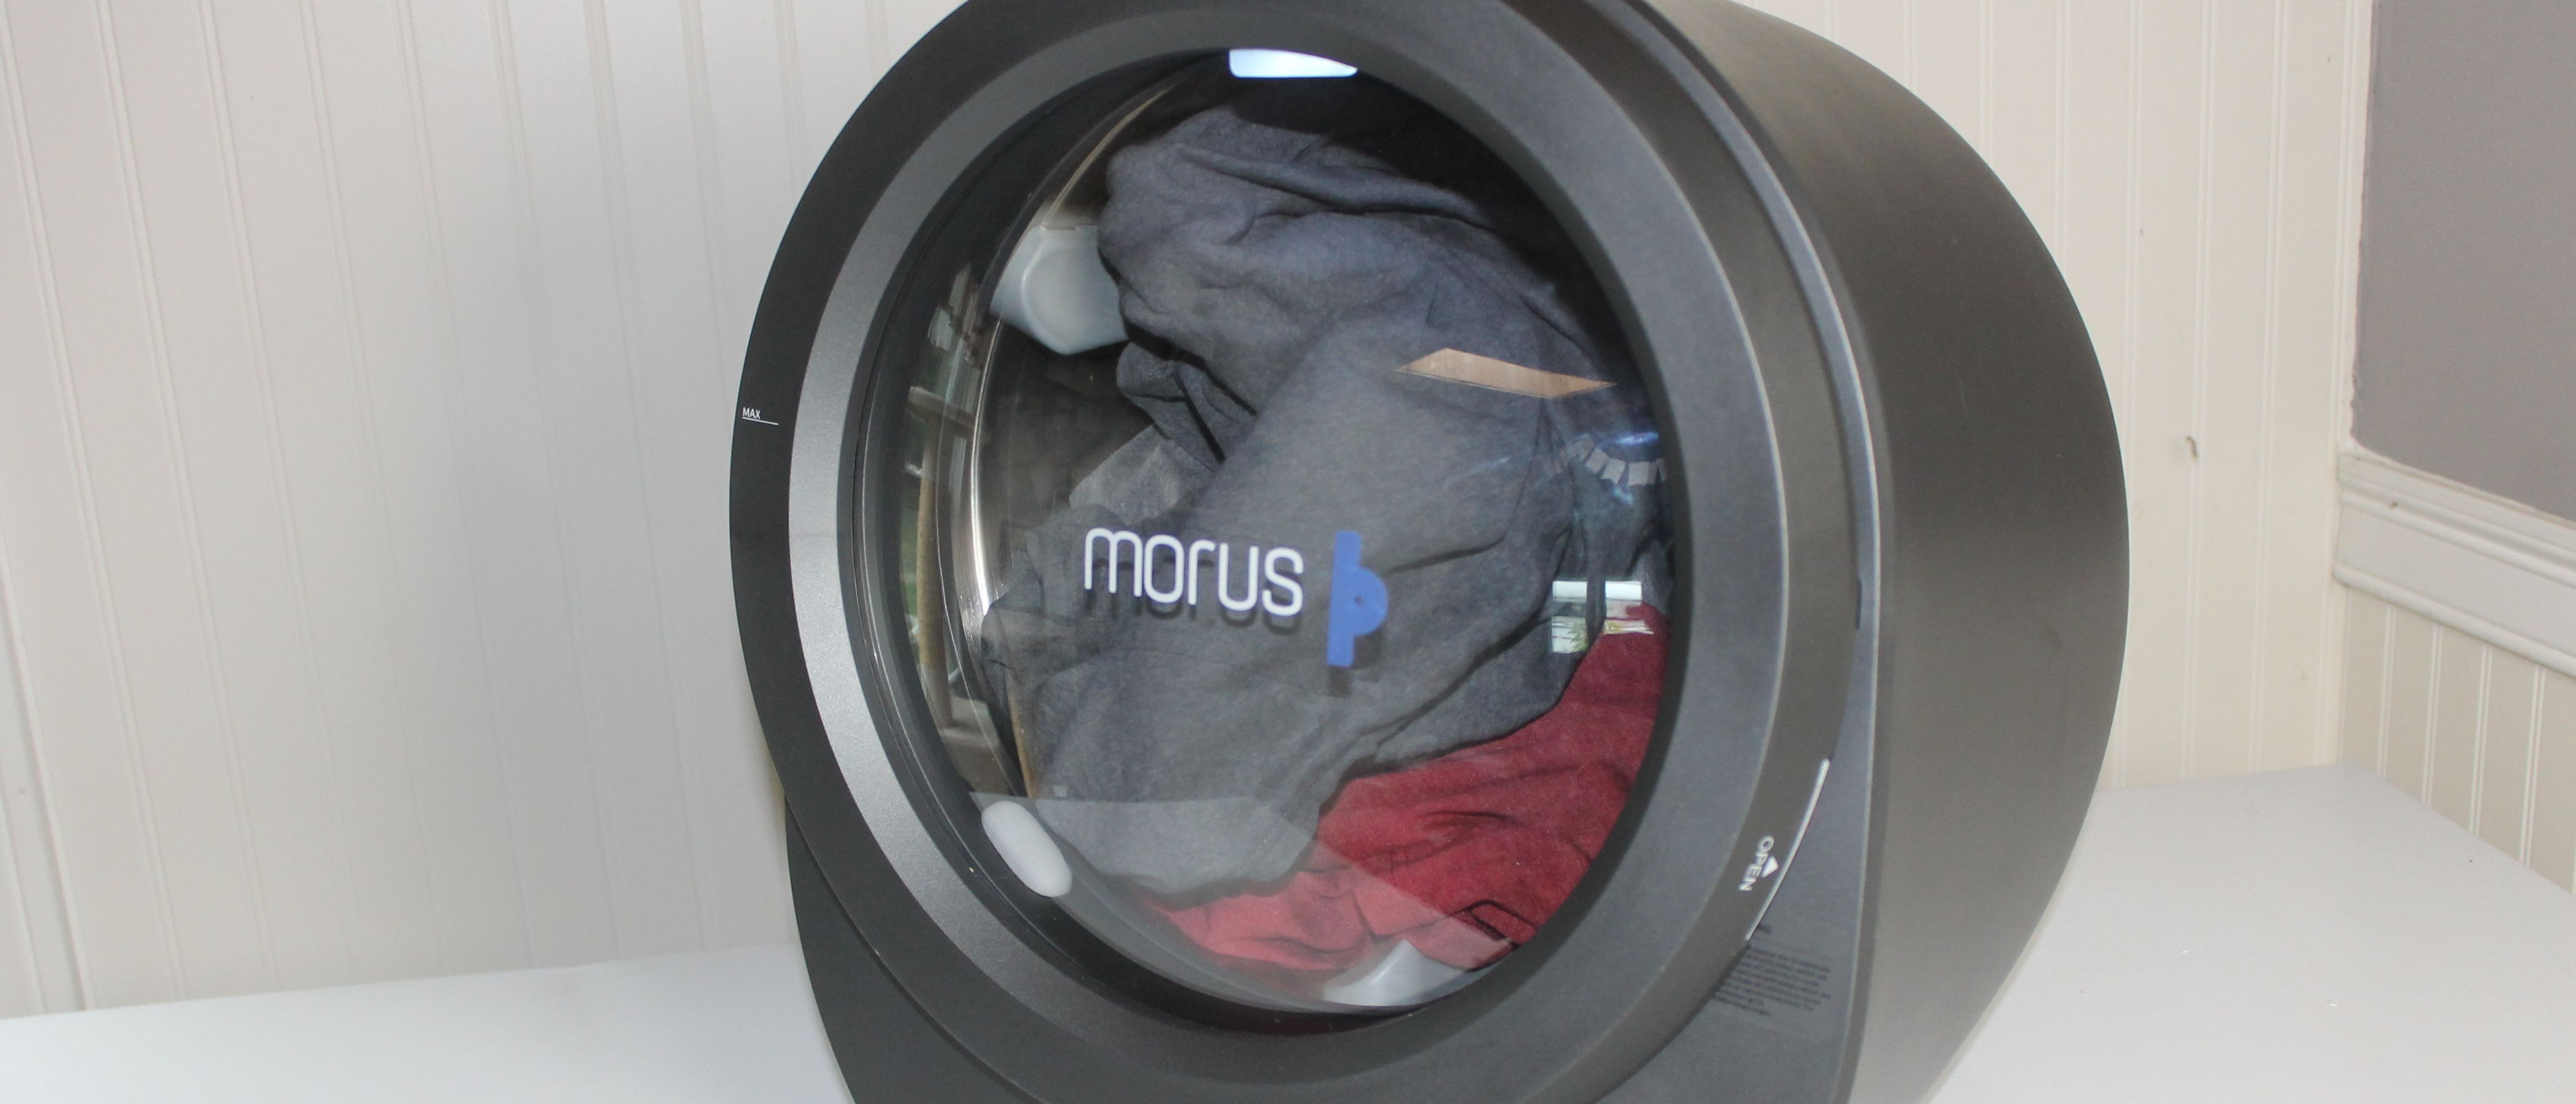 Morus Zero Ultra-Fast Portable Clothes Dryer review | Top Ten Reviews